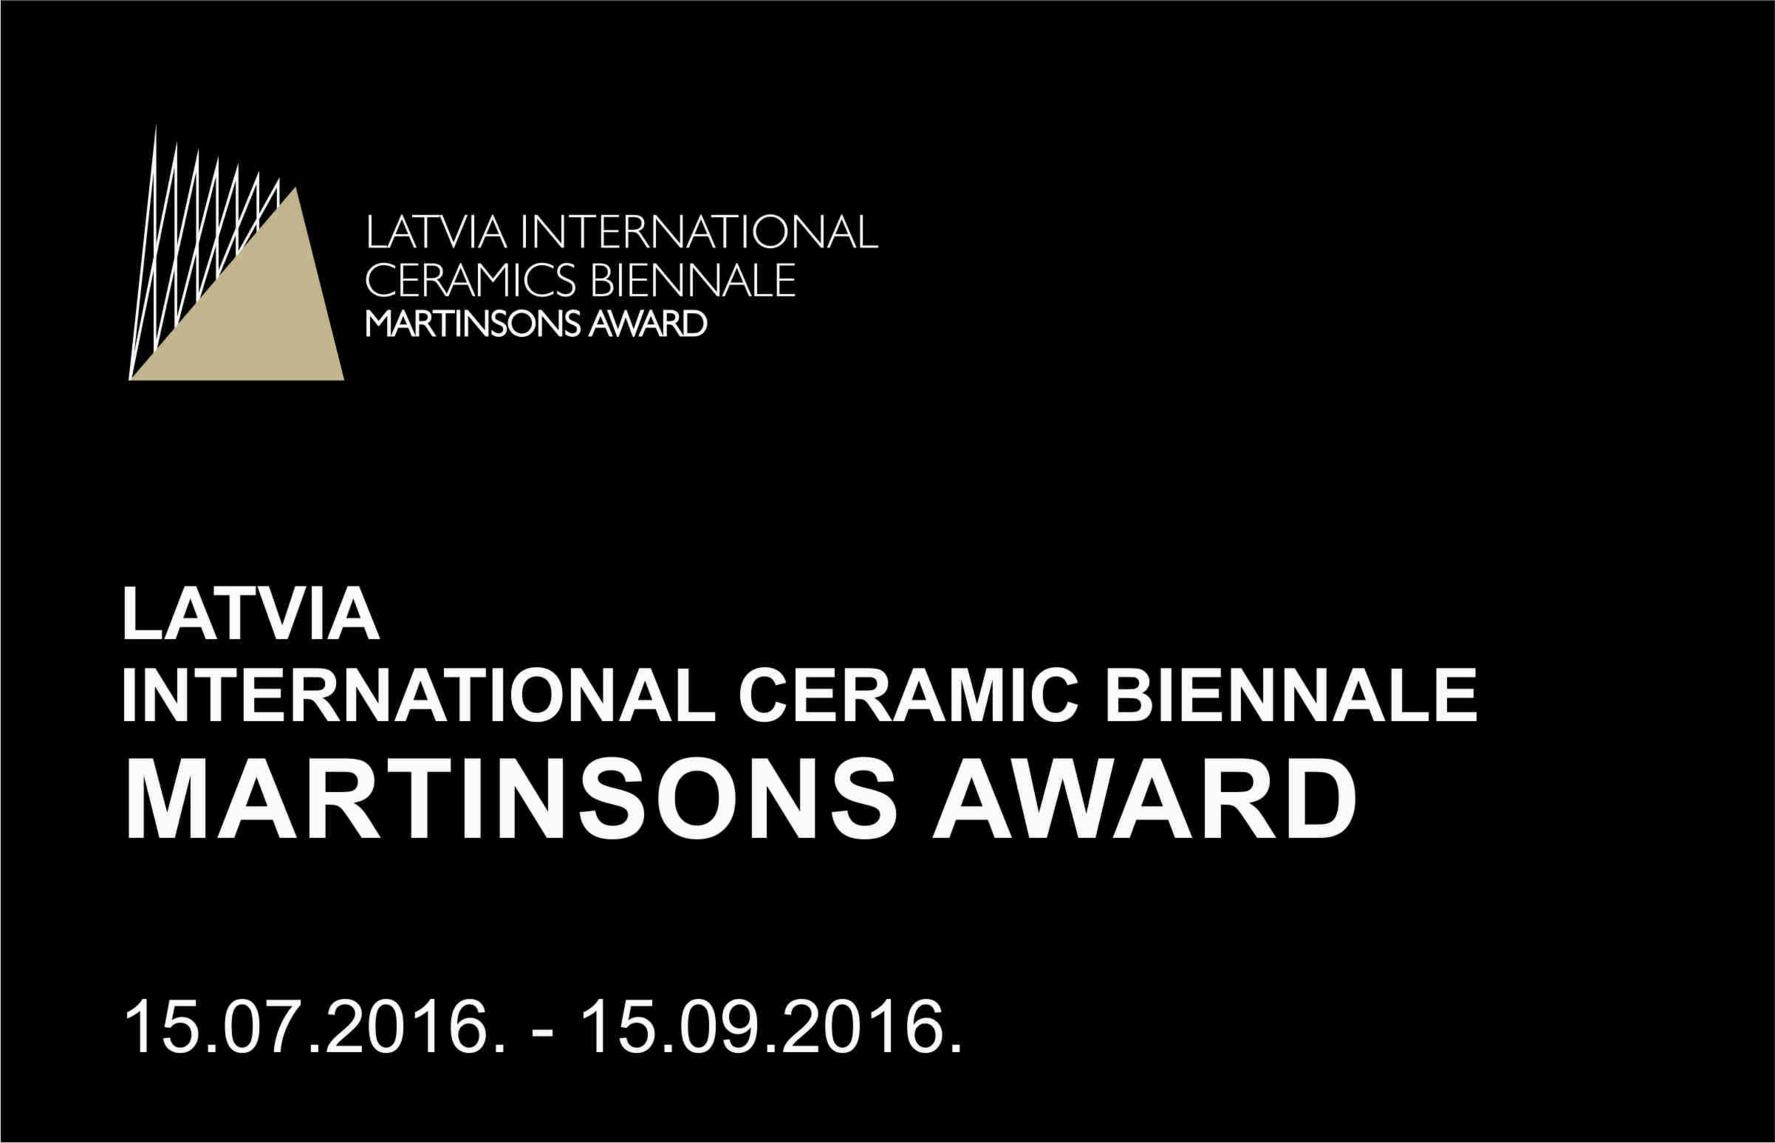 MARTINSONS AWARD Latvia International Ceramics Biennale